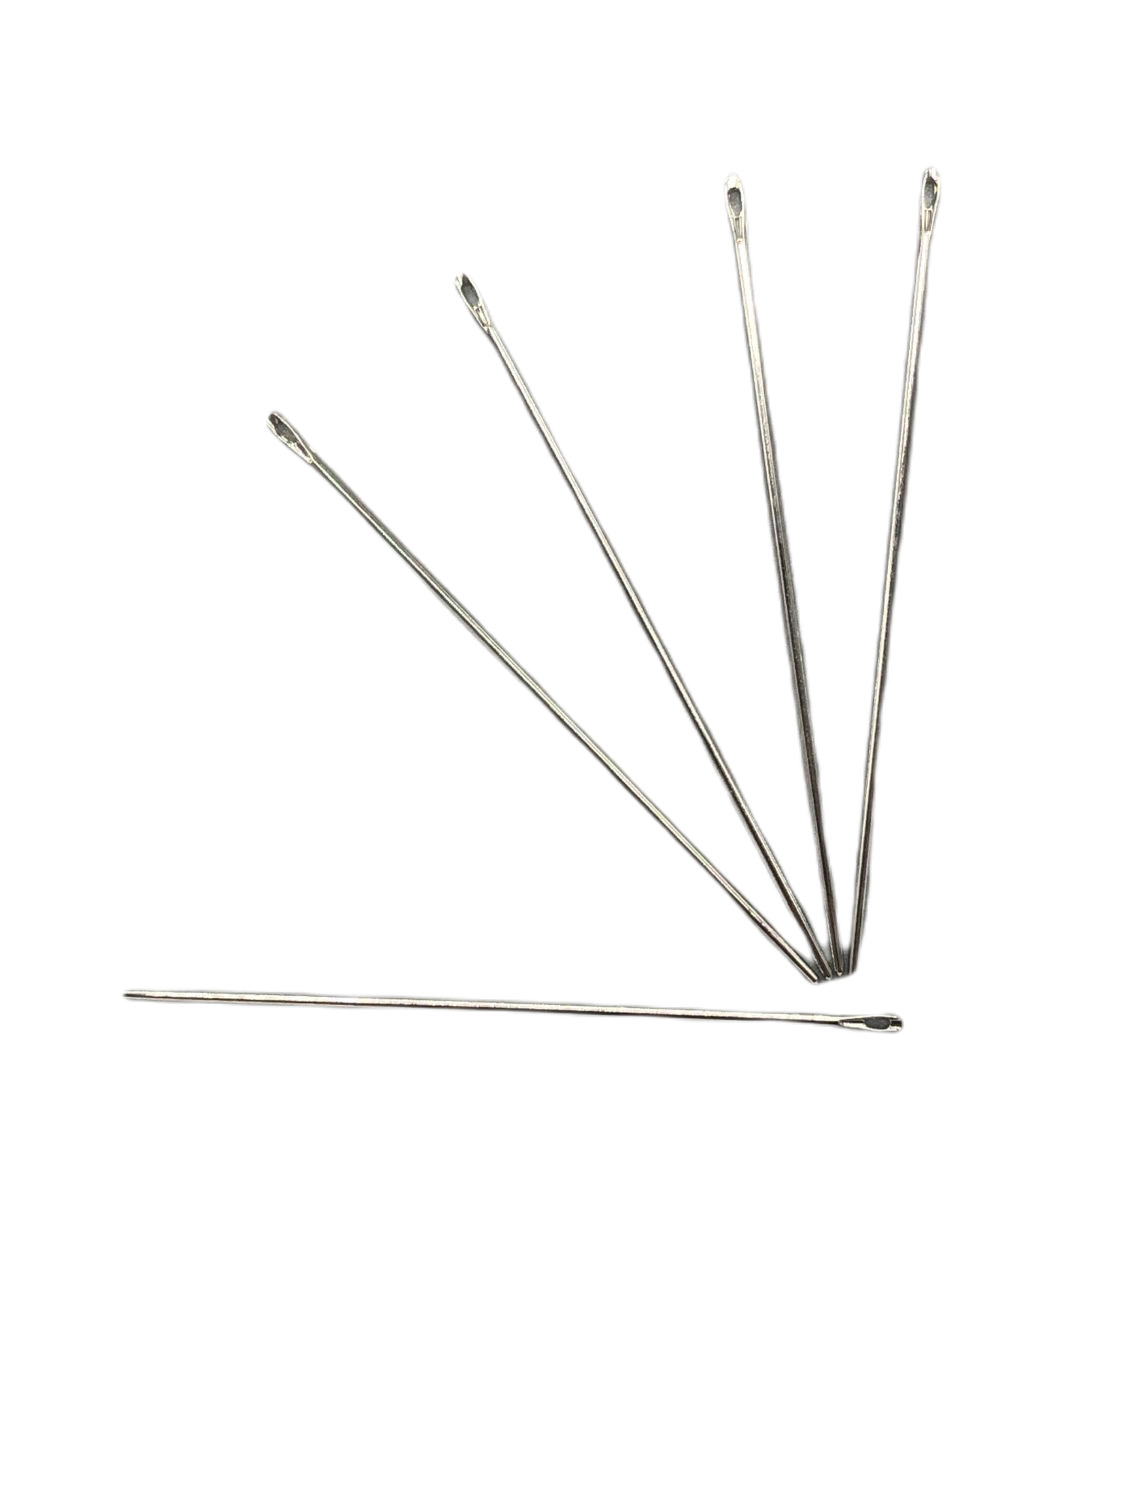 5 Sattler Blunt No2 Sattler Needles 2 3/16in Manufactured In Germany (0